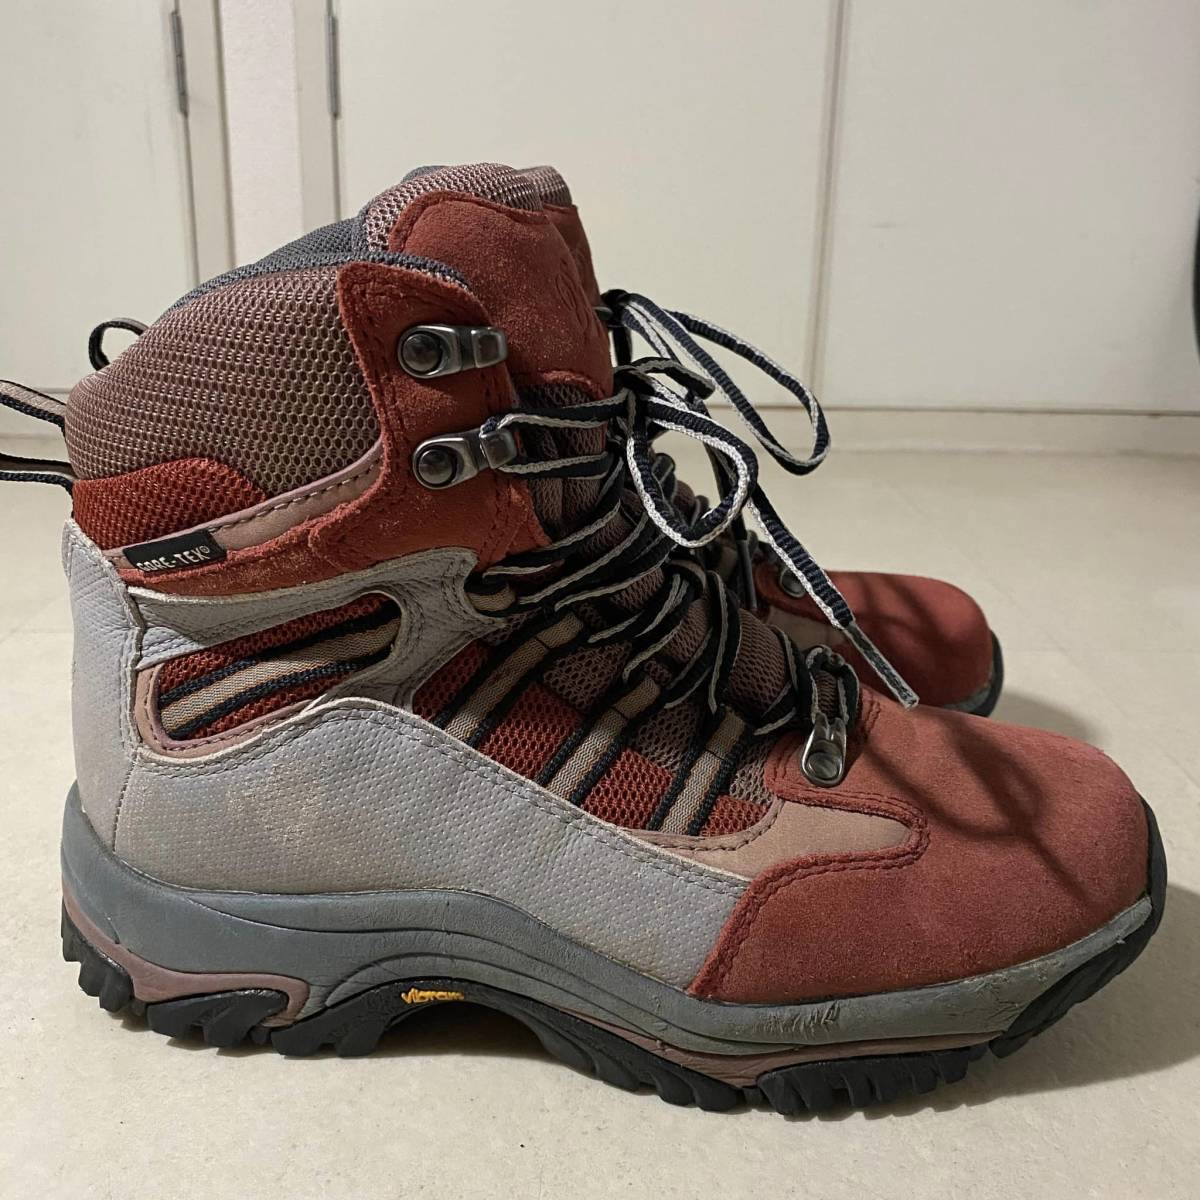 Danner Danner trekking shoes GORE TEX suede VIBRAM sole mountain climbing shoes brick color [24]